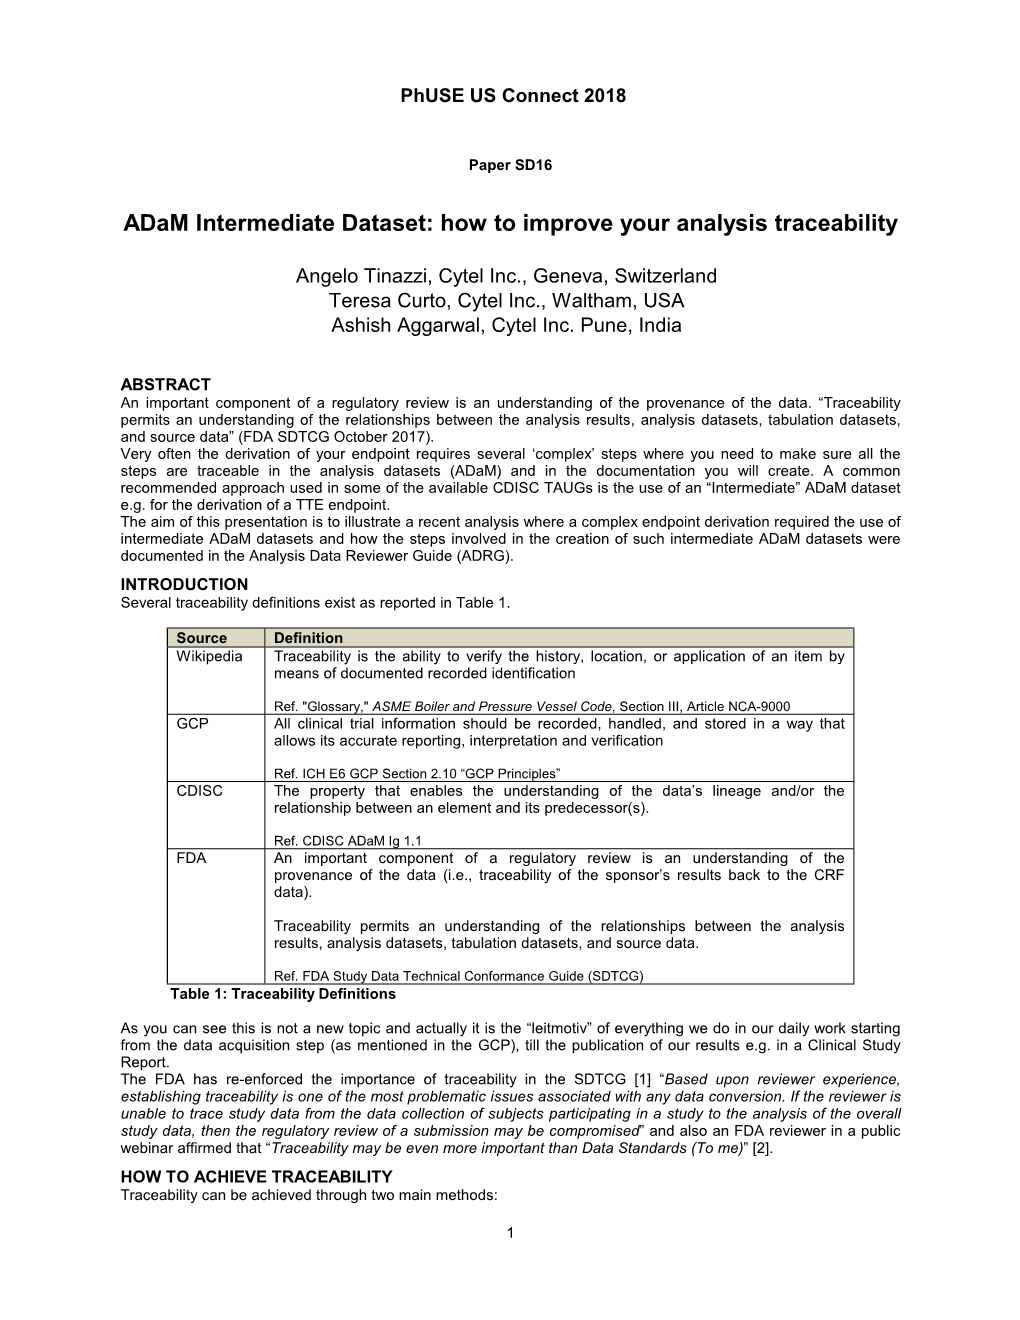 Adam Intermediate Dataset: How to Improve Your Analysis Traceability